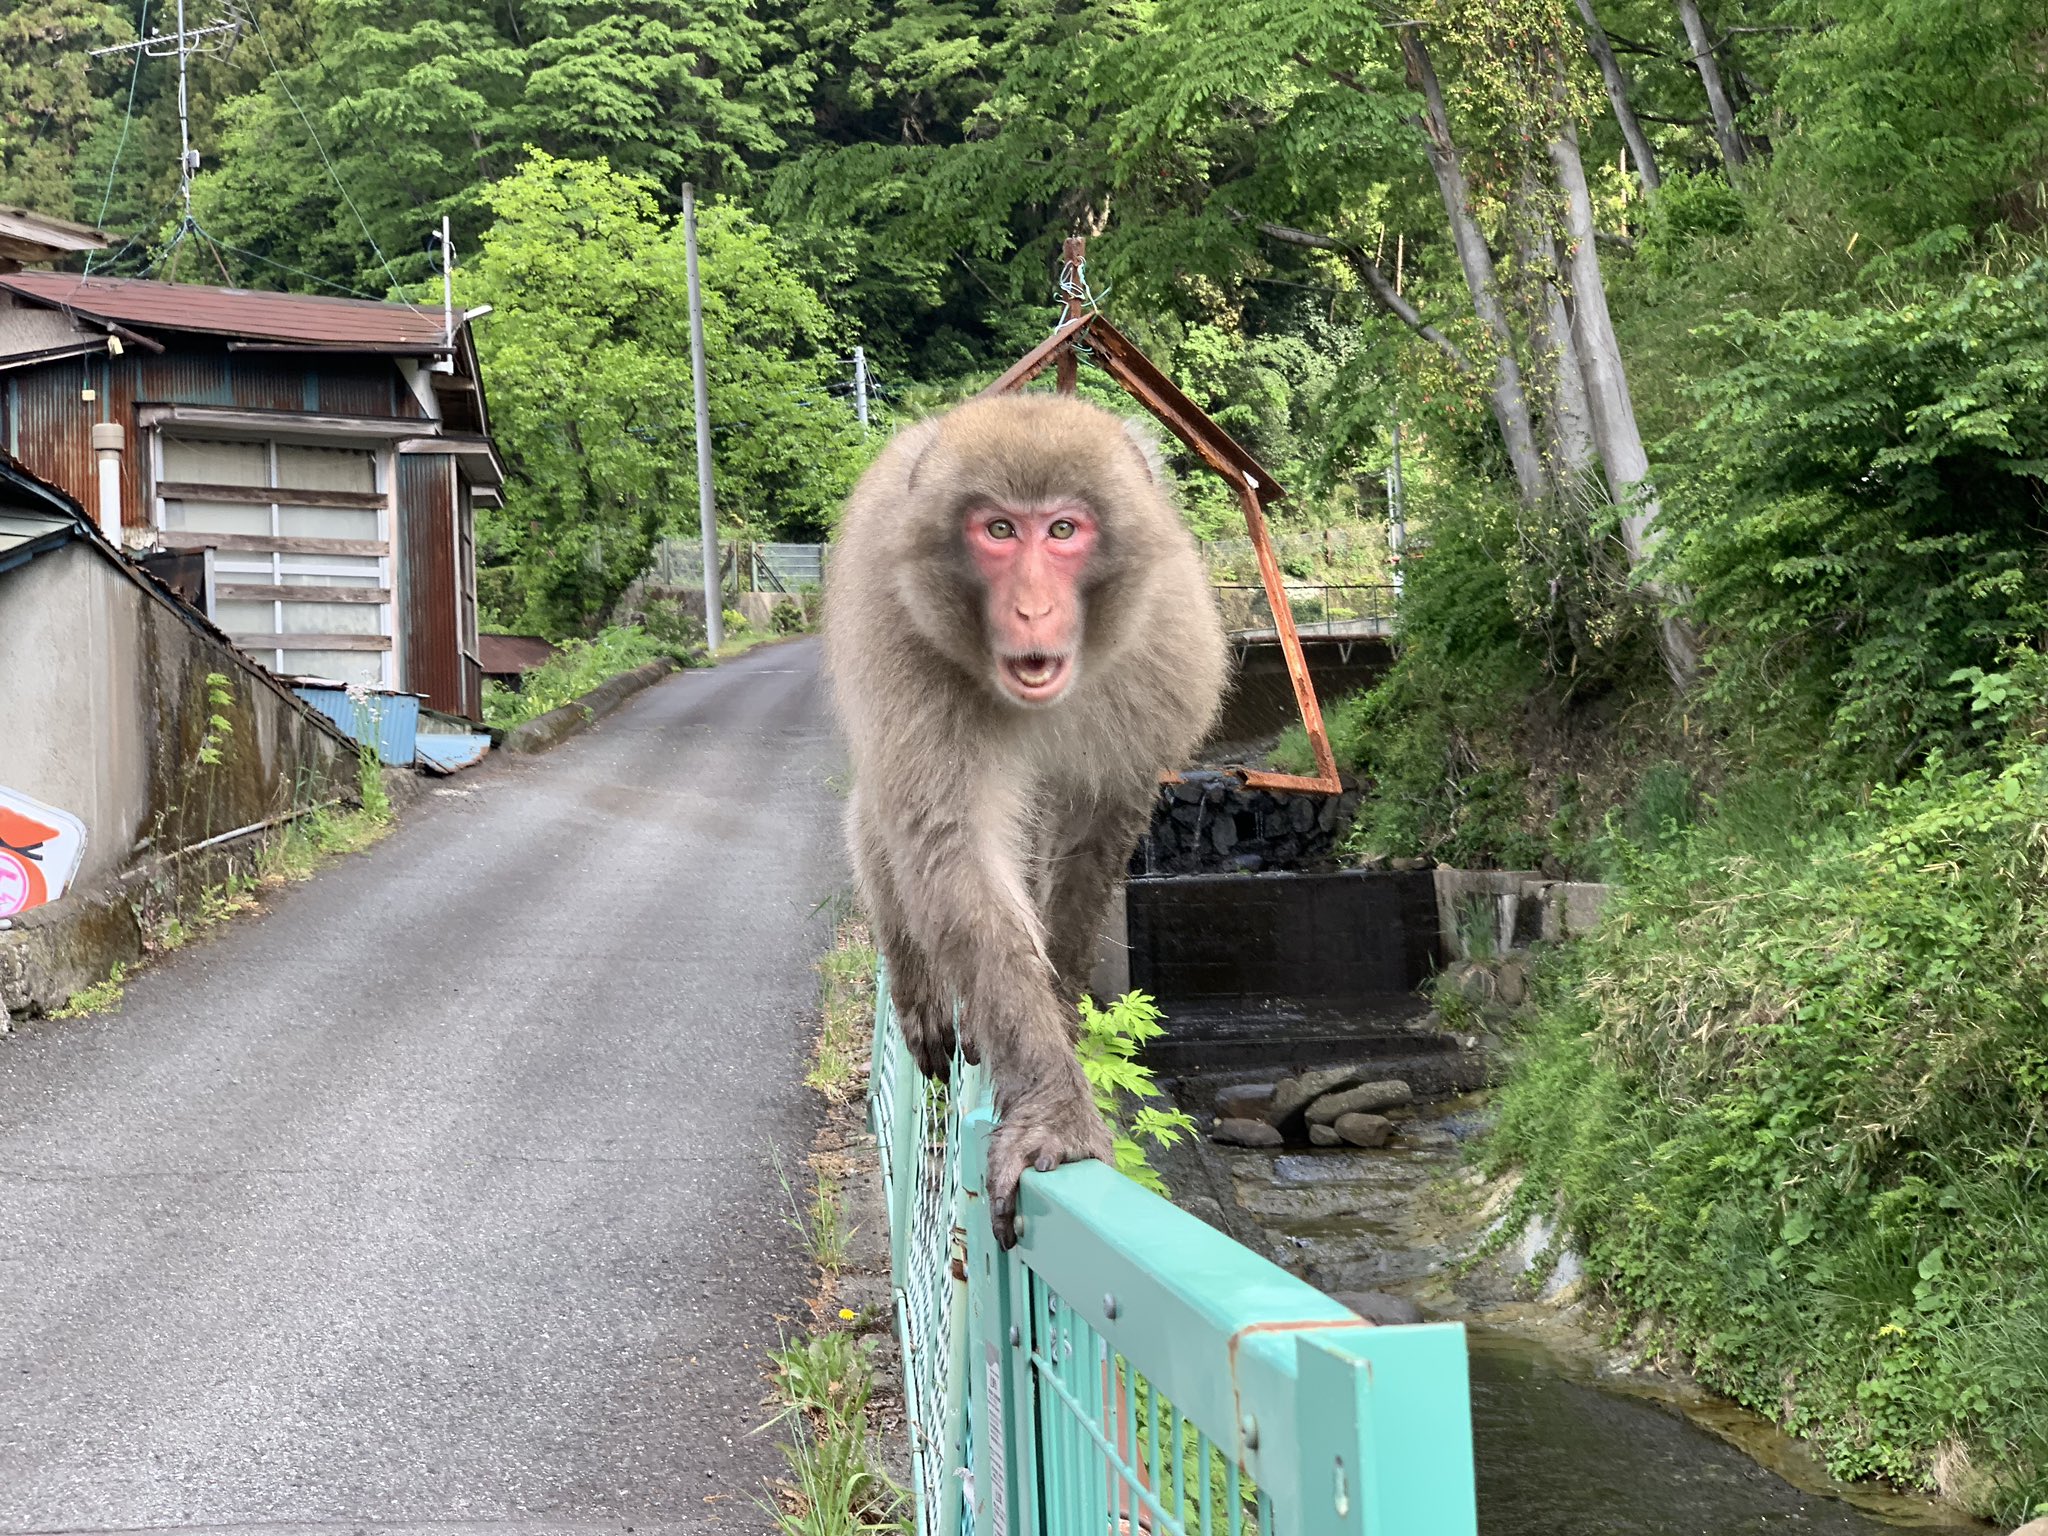 Orgone 今日は会社の同僚と群馬県の妙義山の裏ルートに行ってきました 横川駅駅前でいきなり猿 威嚇されてますね T Co Bso161c4r8 Twitter